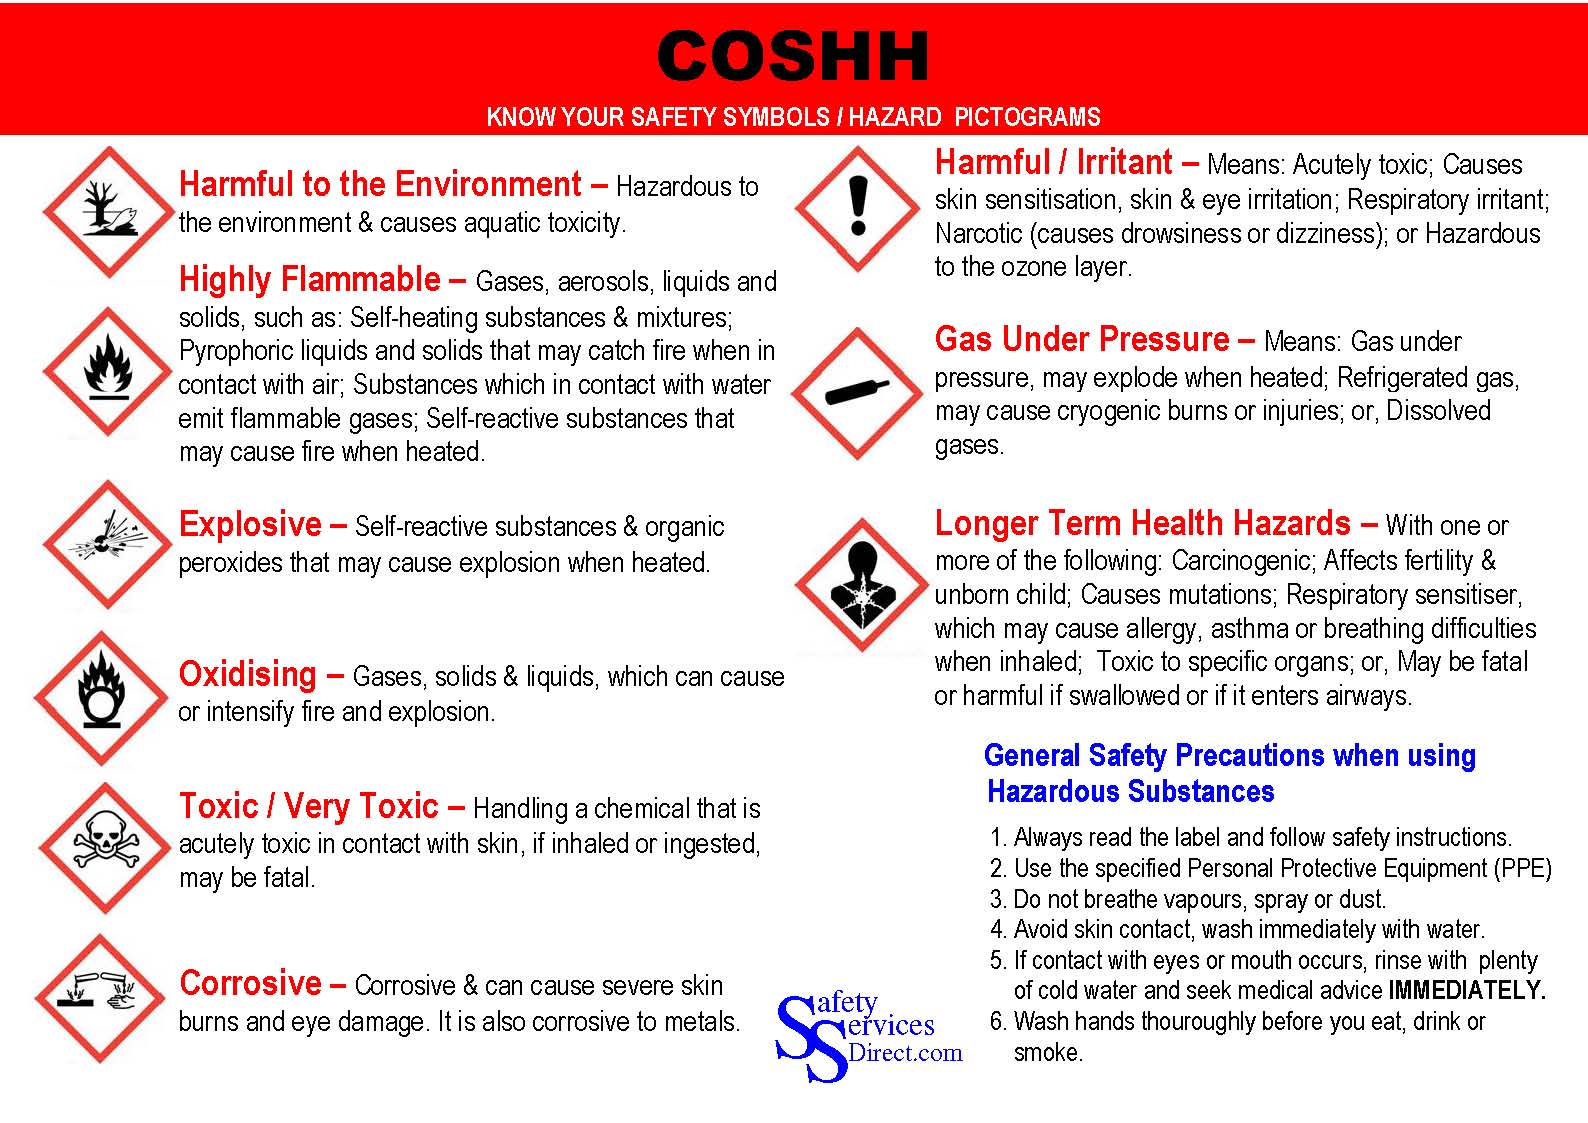 Coshh Hazard Symbols Poster Safety Services Direct